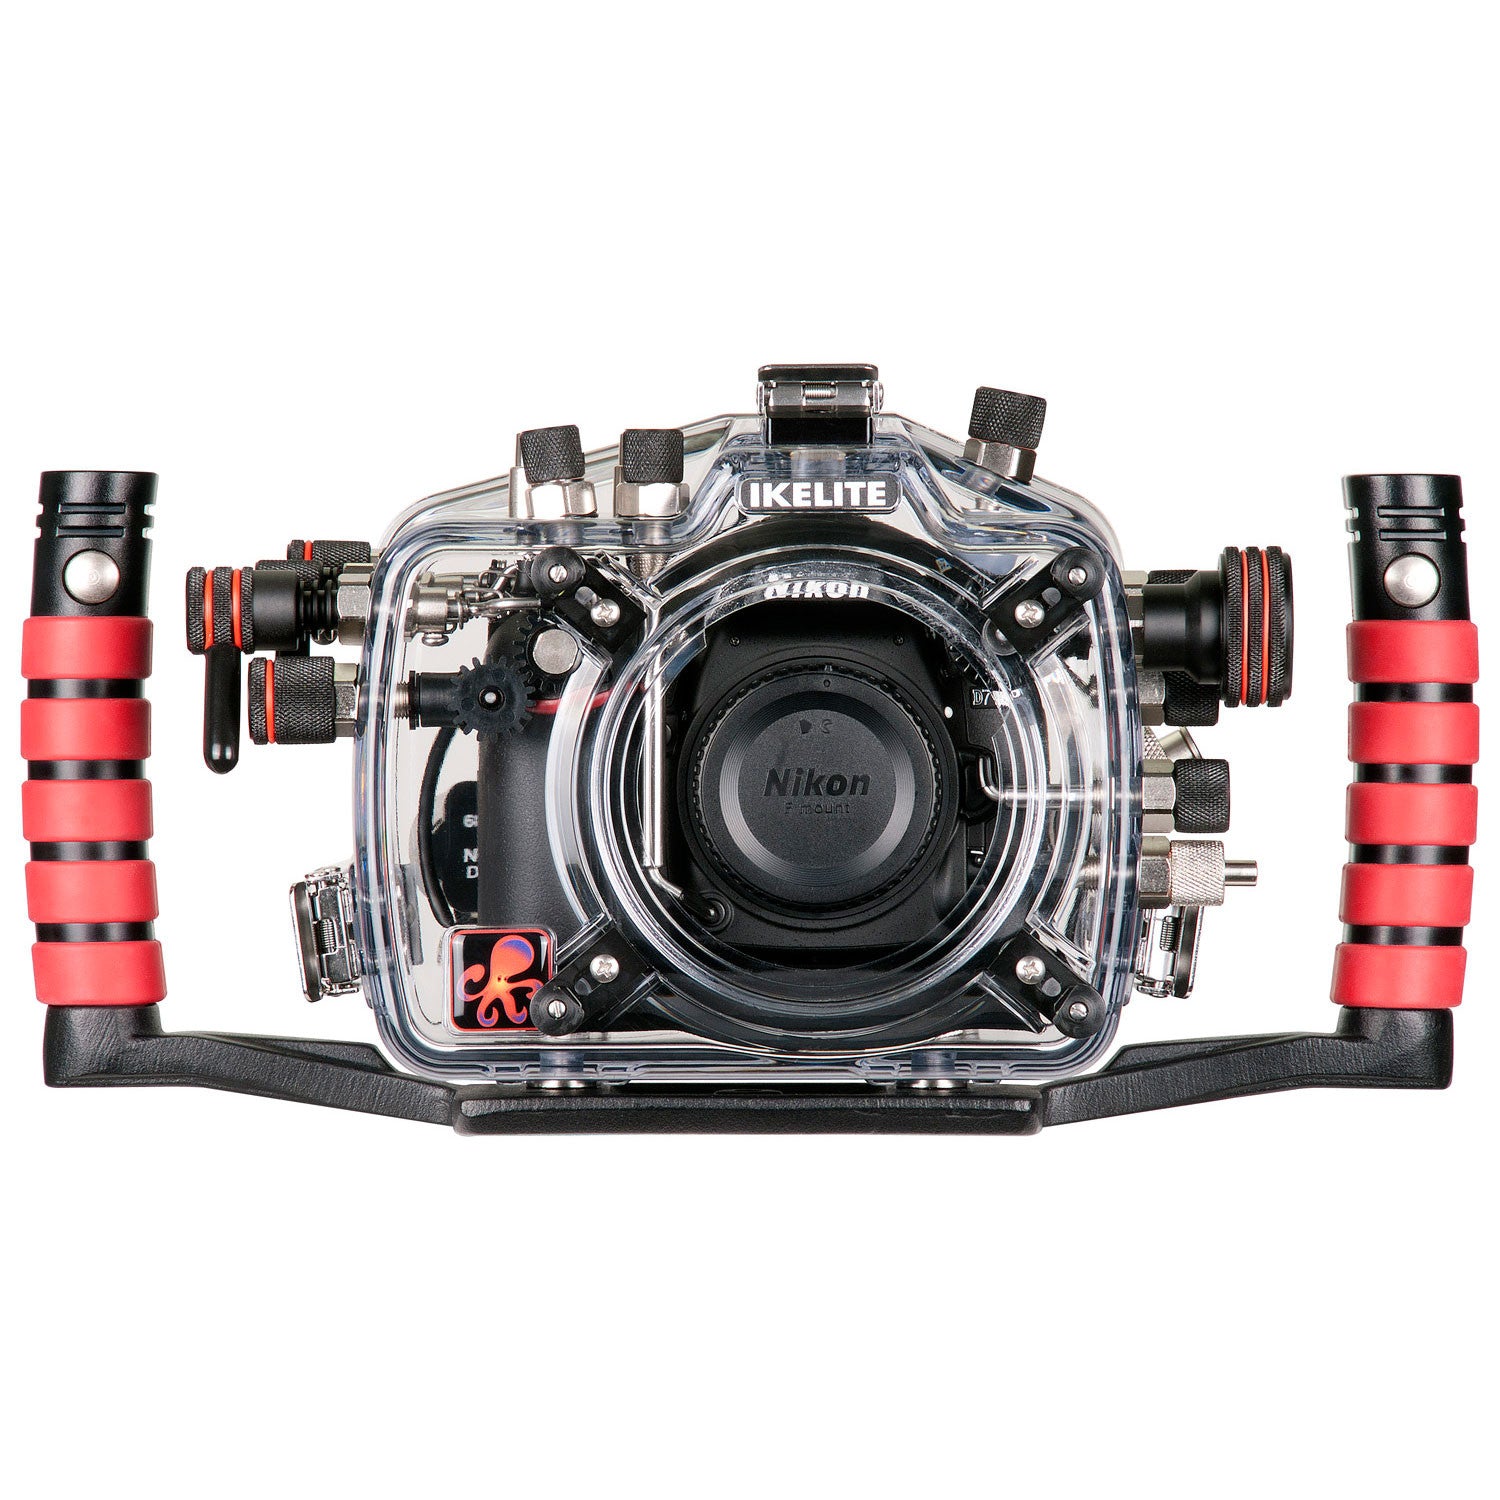 200FL Underwater TTL Housing for Nikon D7100 D7200 DSLR Cameras